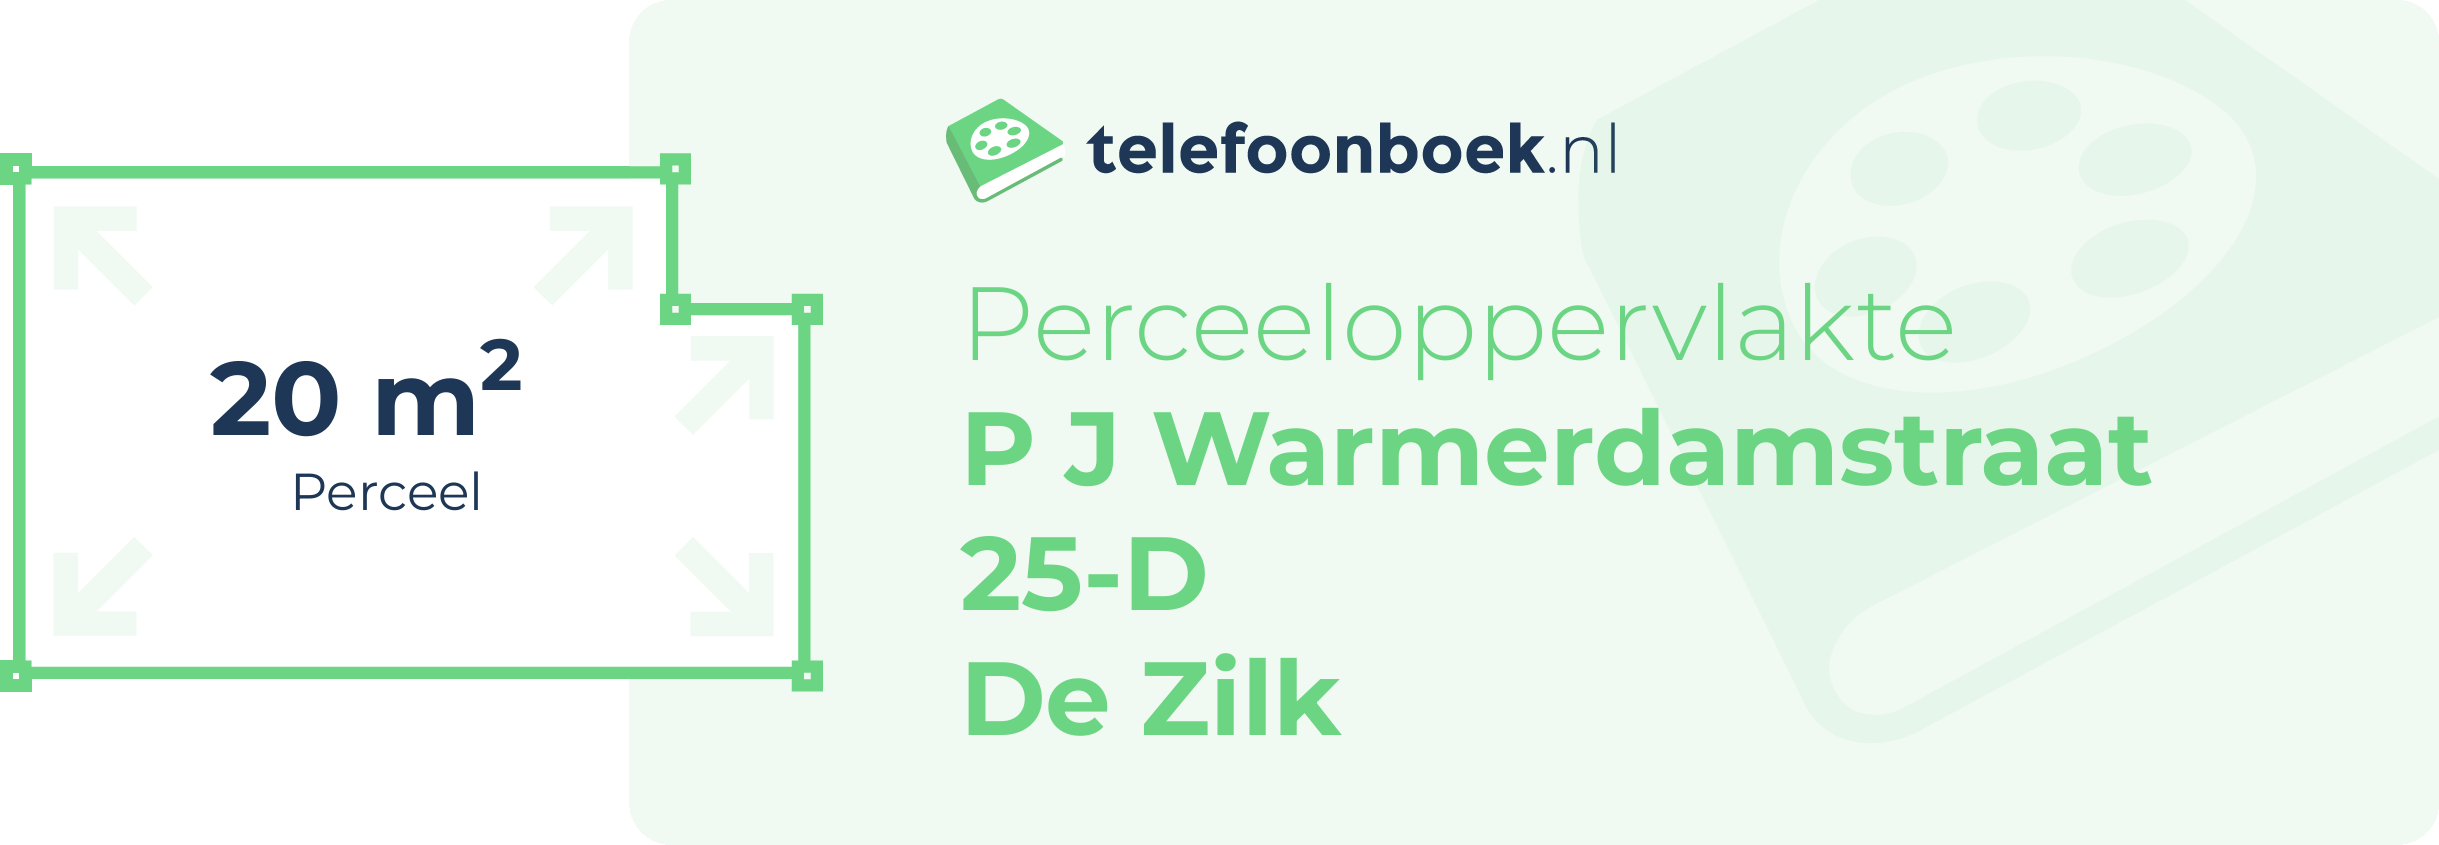 Perceeloppervlakte P J Warmerdamstraat 25-D De Zilk